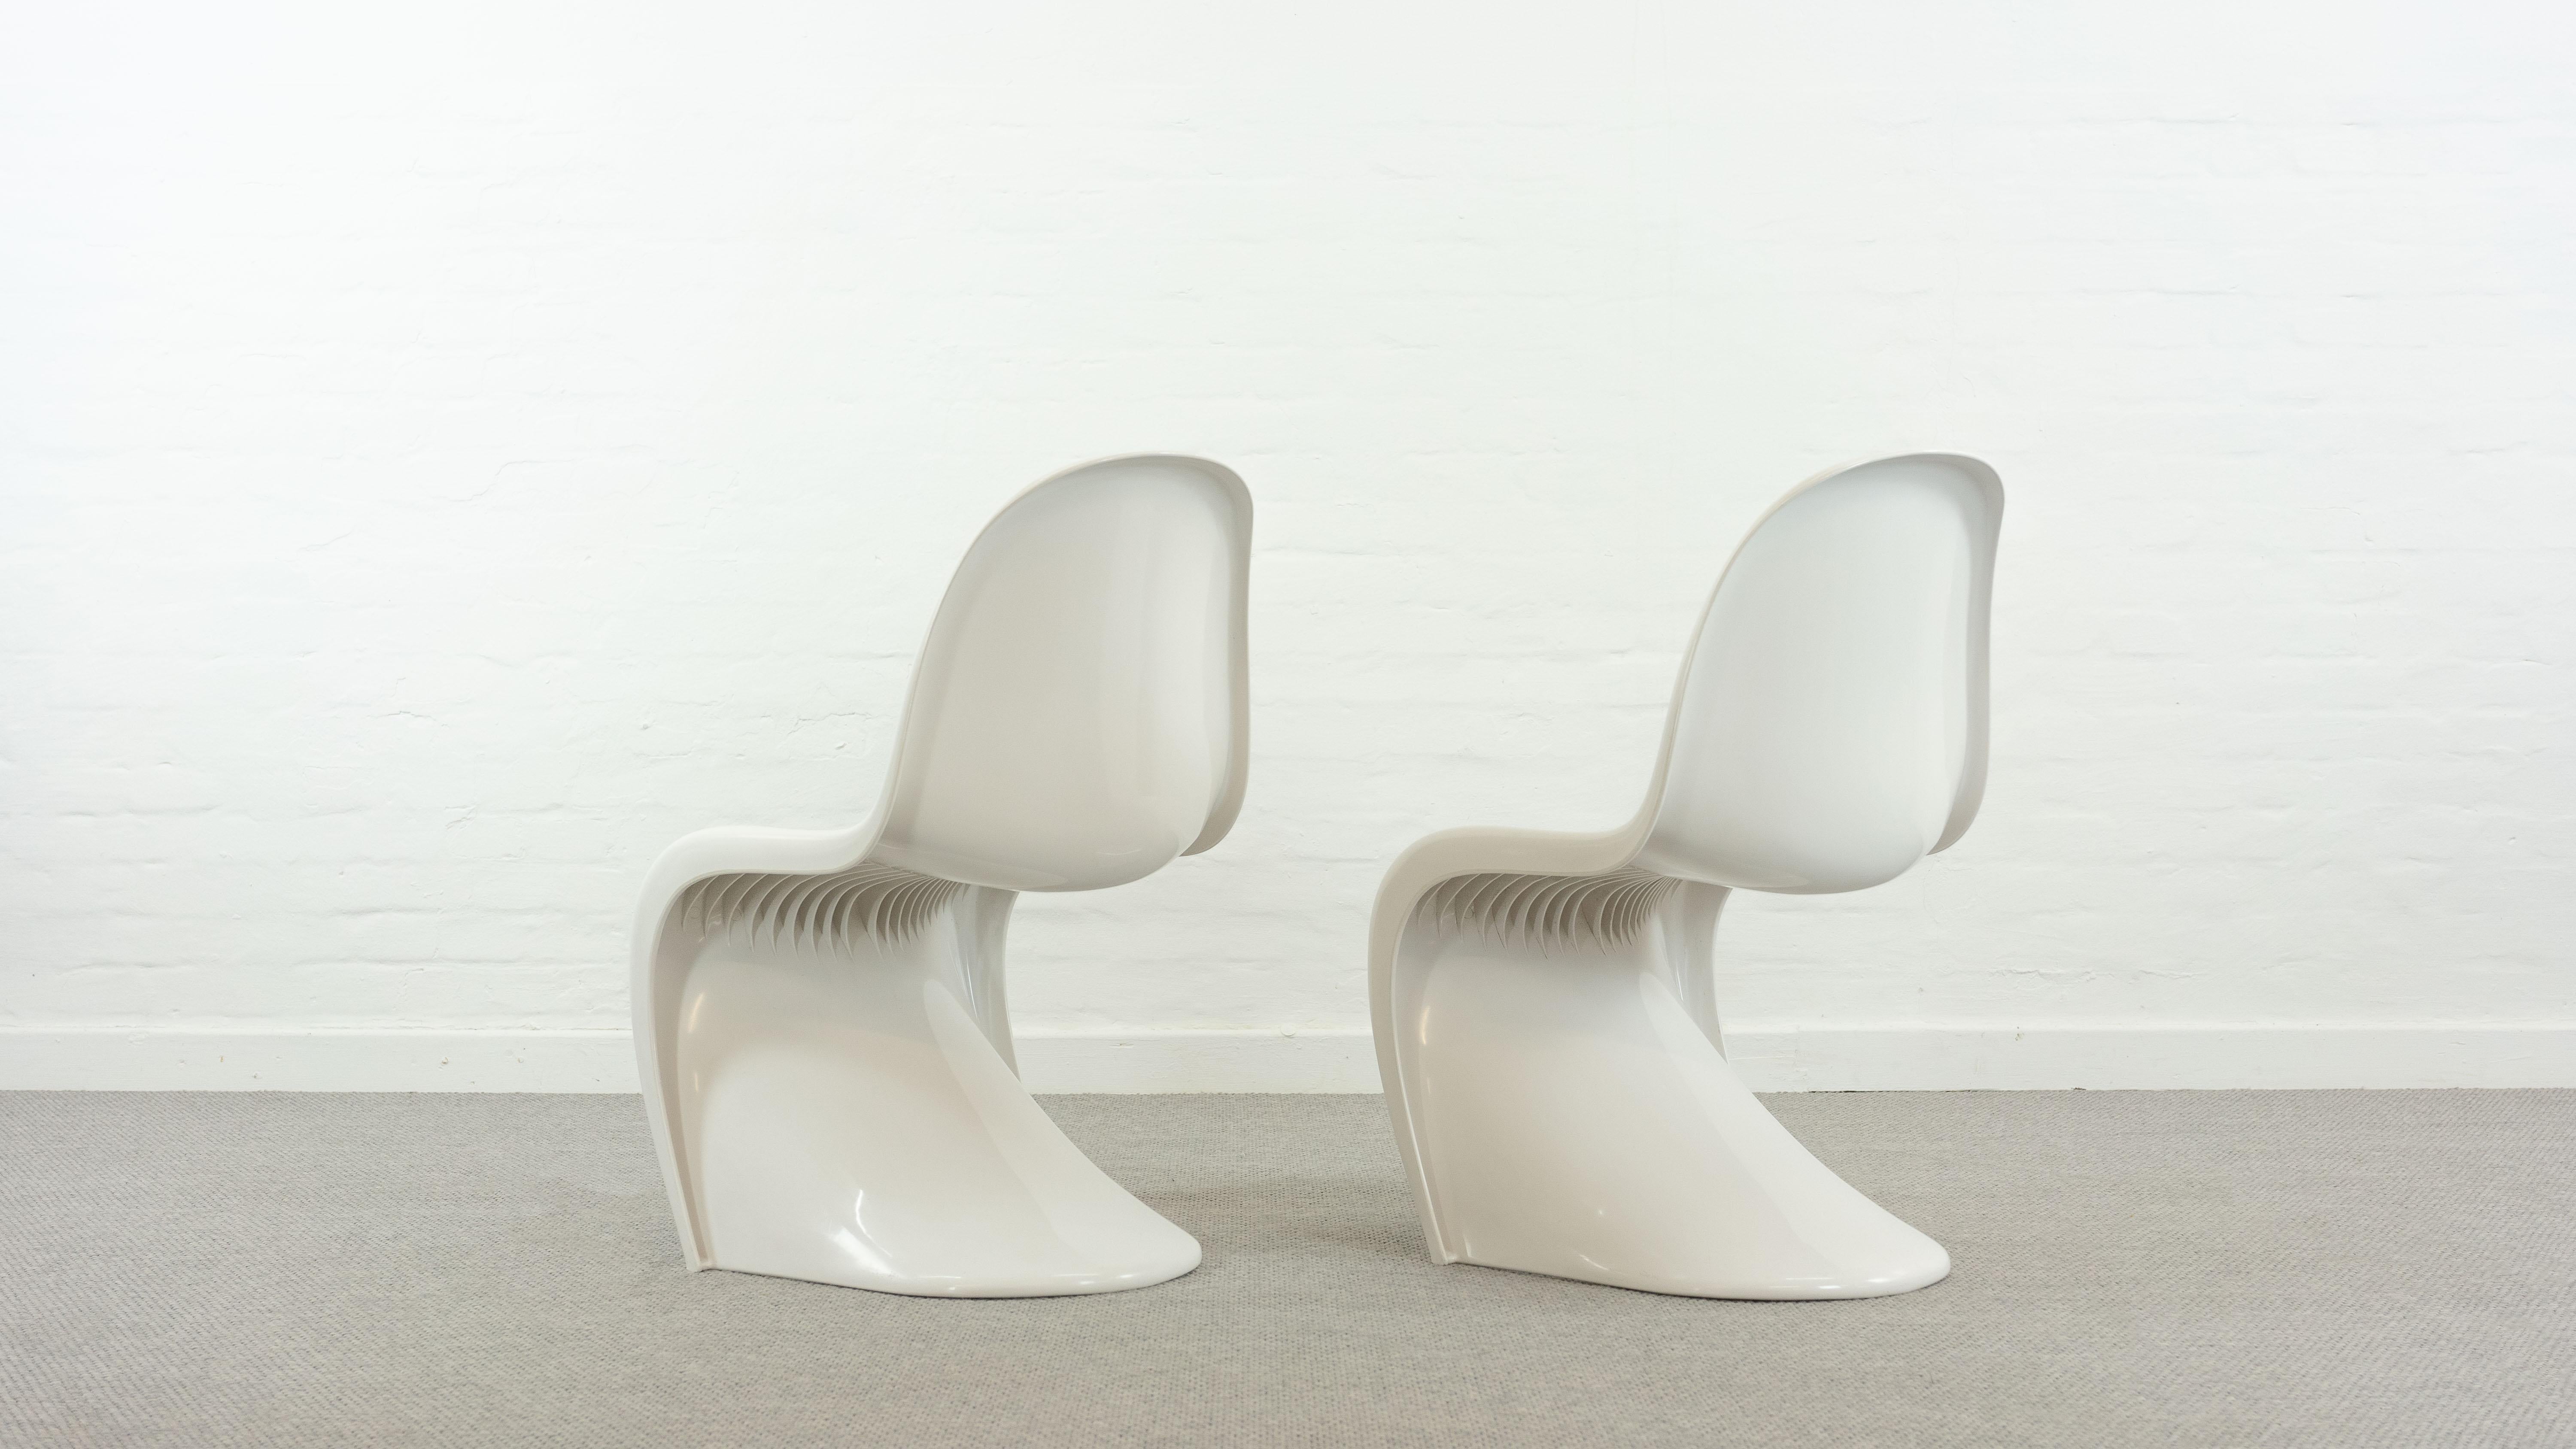 Late 20th Century Pair of Panton Chairs by Verner Panton for Fehlbaum / Herman Miller 1976